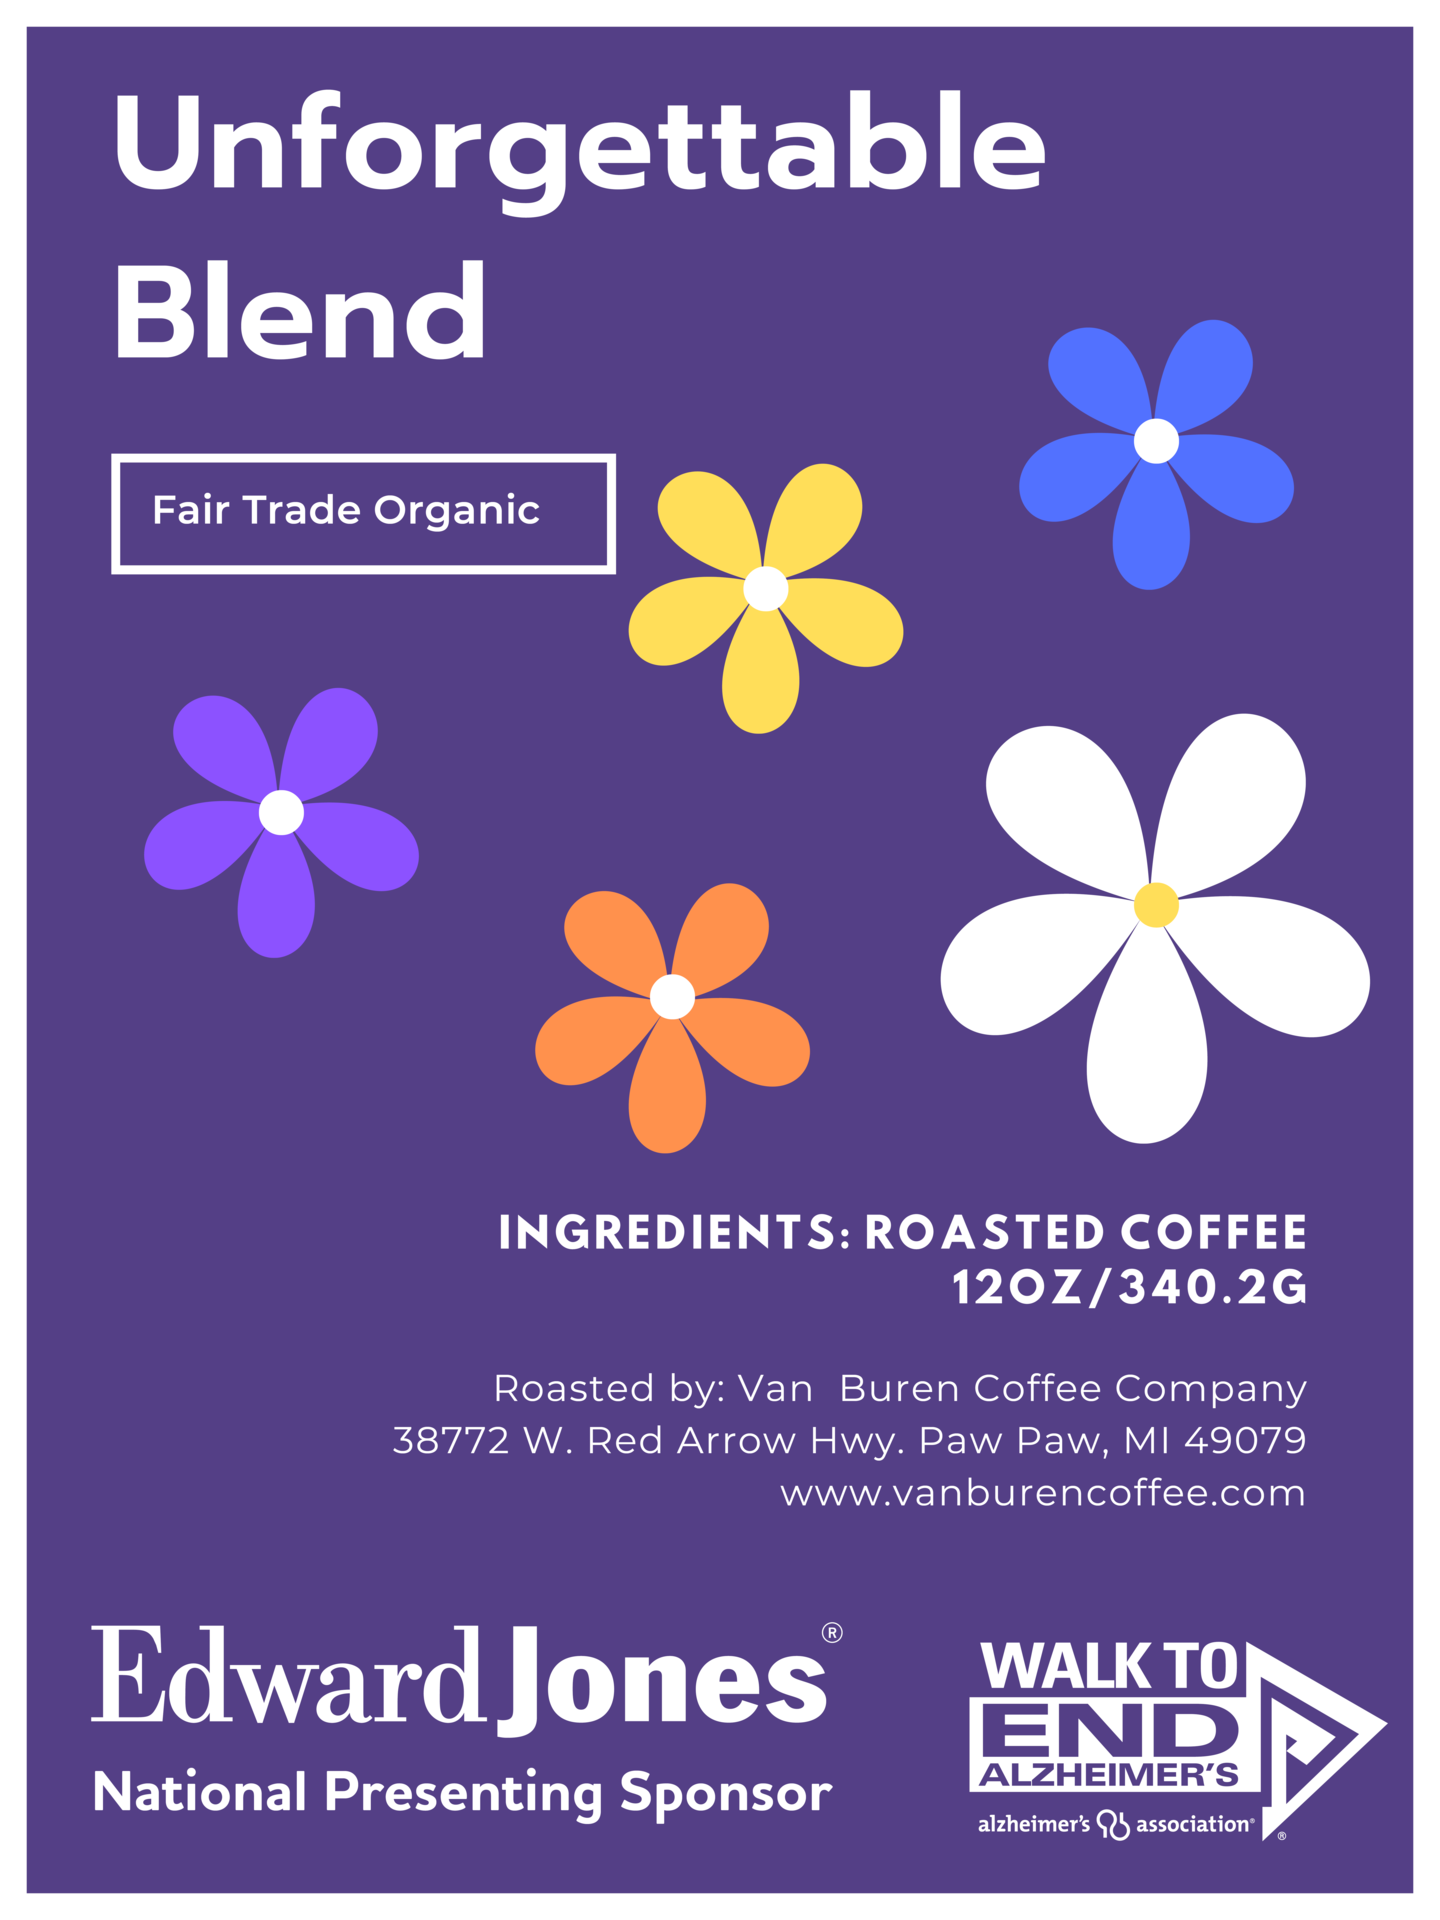 Unforgettable Blend - Walk to end Alzheimer's - Fair Trade Organic Roasted Coffee